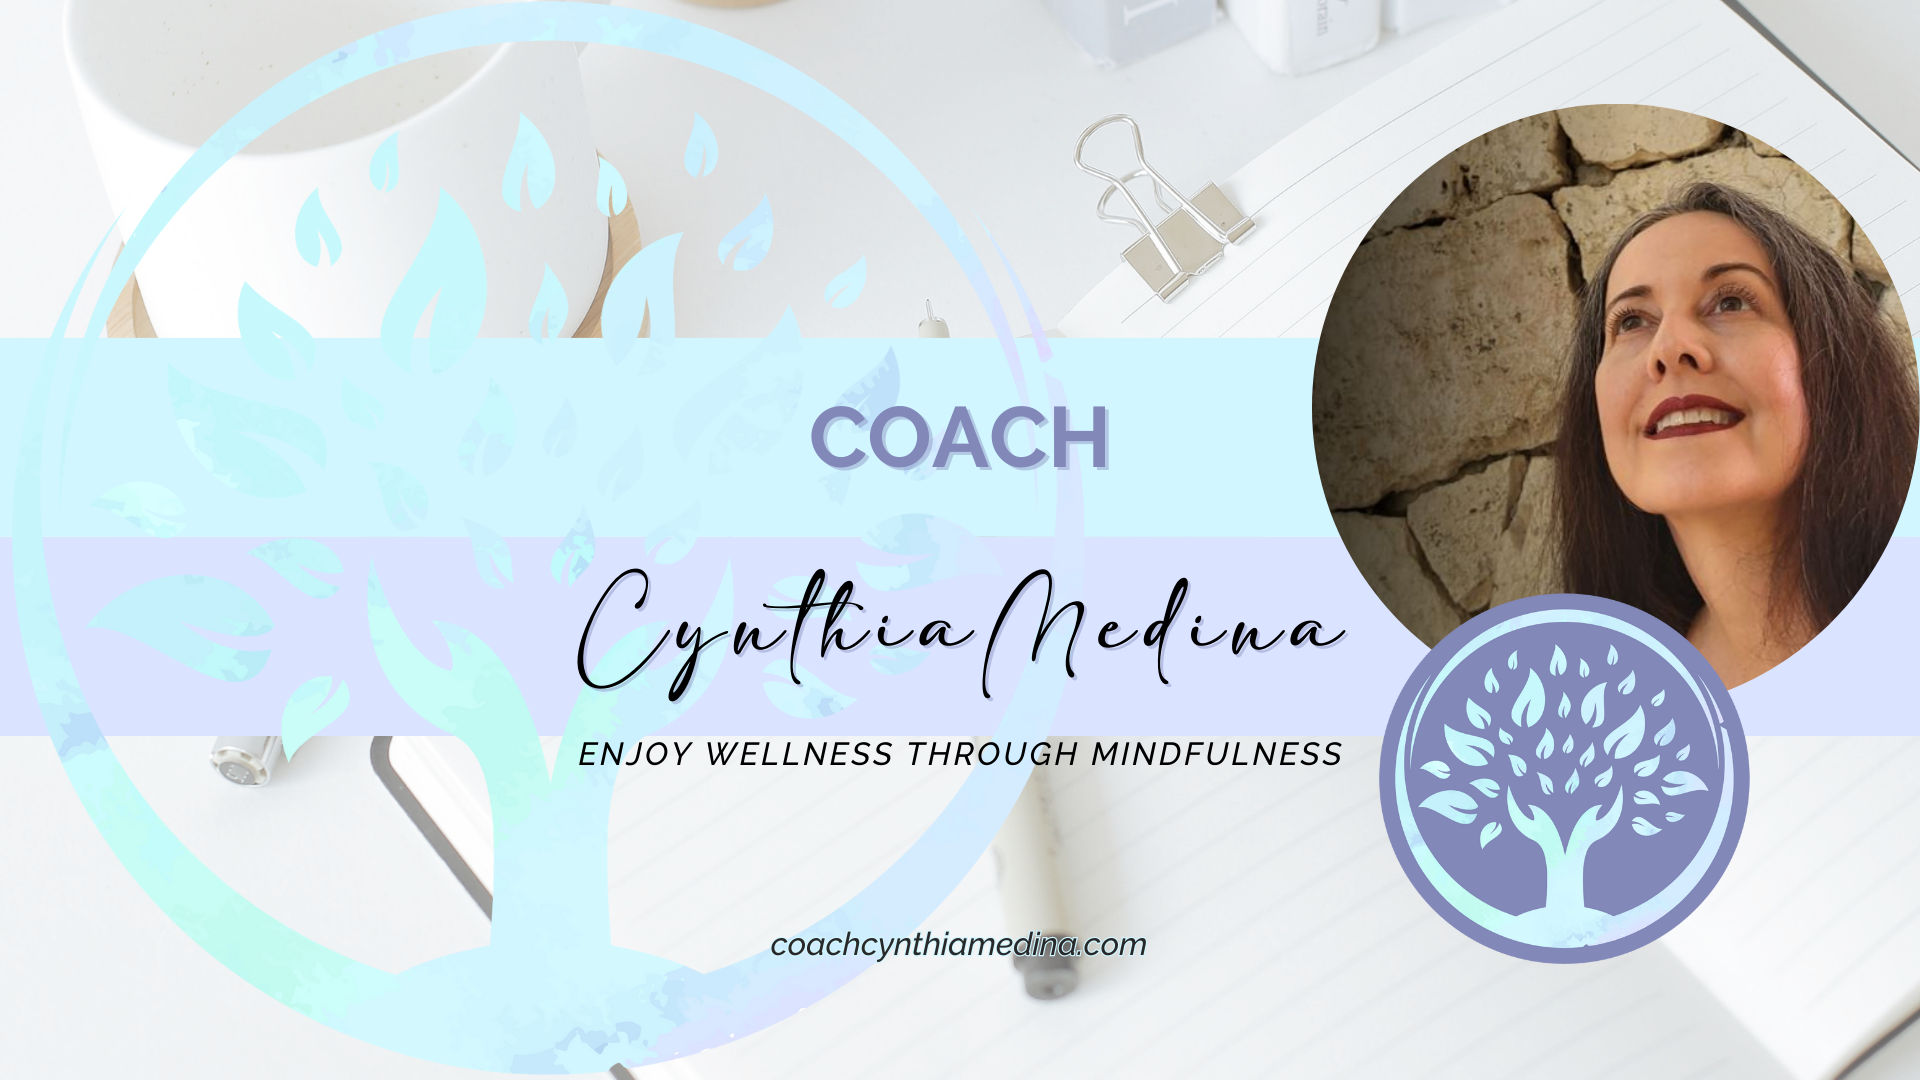 coach cynthia medina, enjoy wellness through mindfulness, the limitless woman